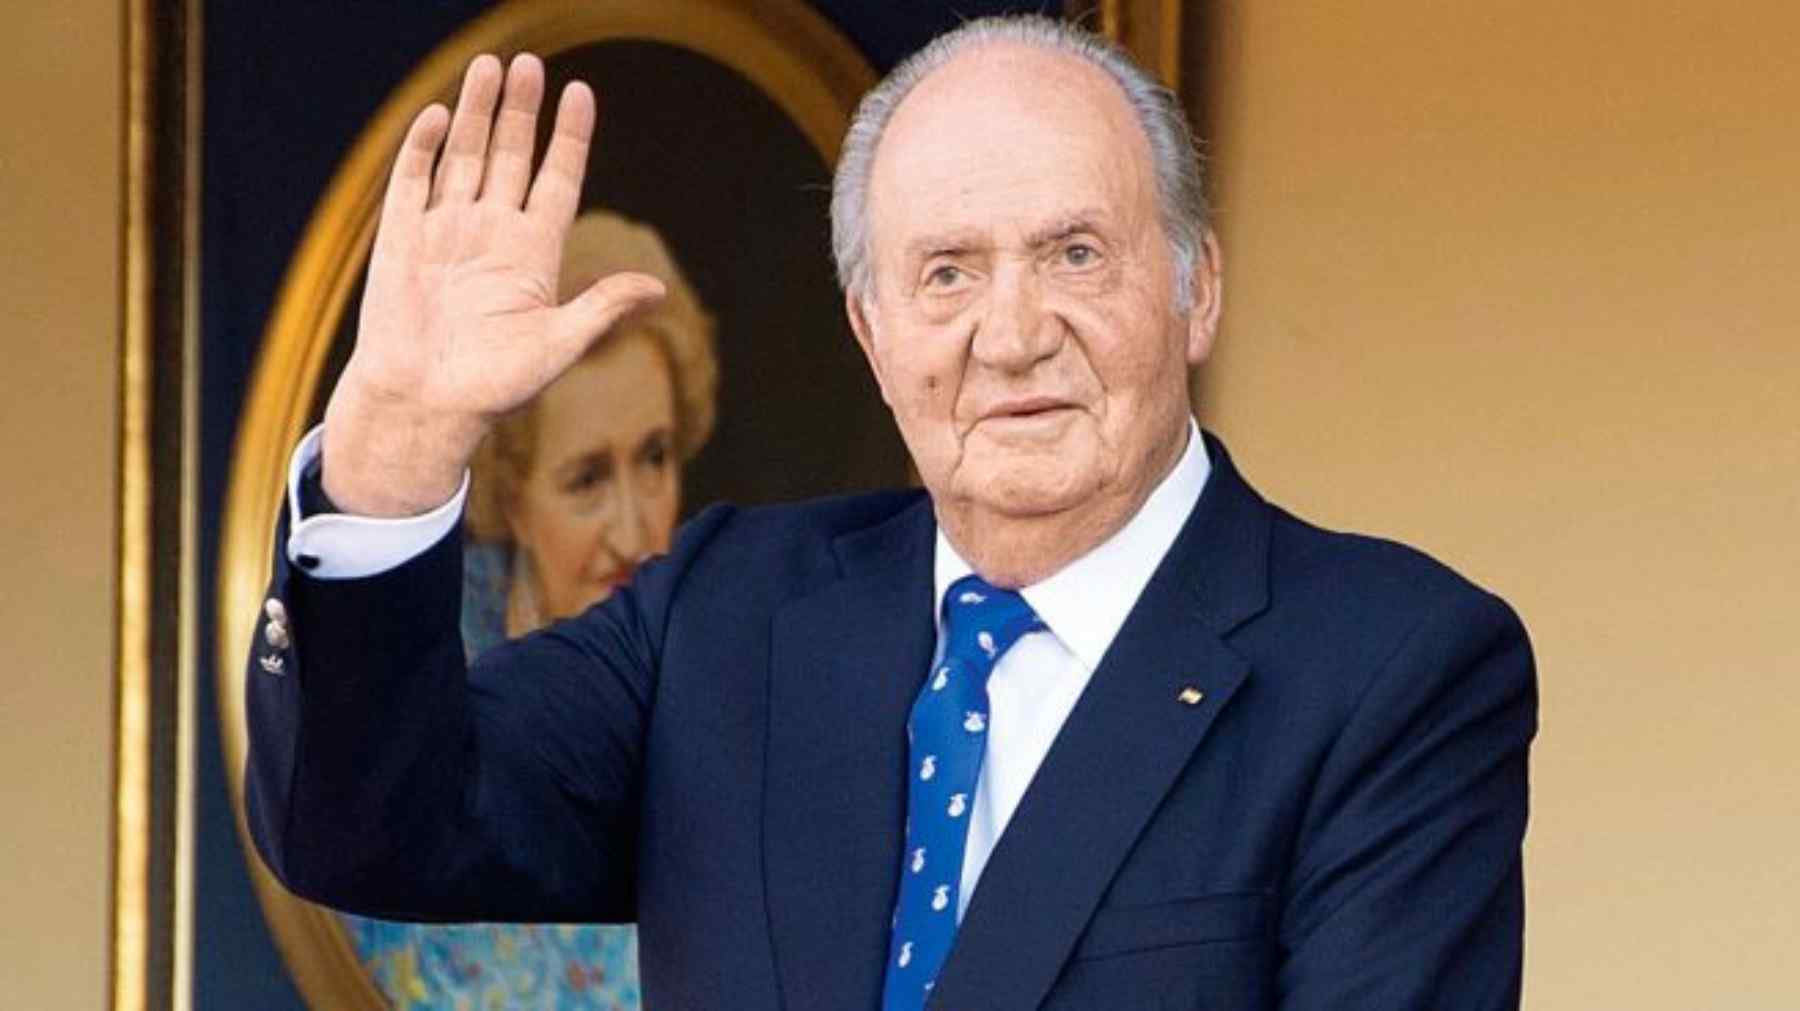 La hermanastra de la supuesta hija de Juan Carlos I revela toda la verdad: “La trató maravillosamente”